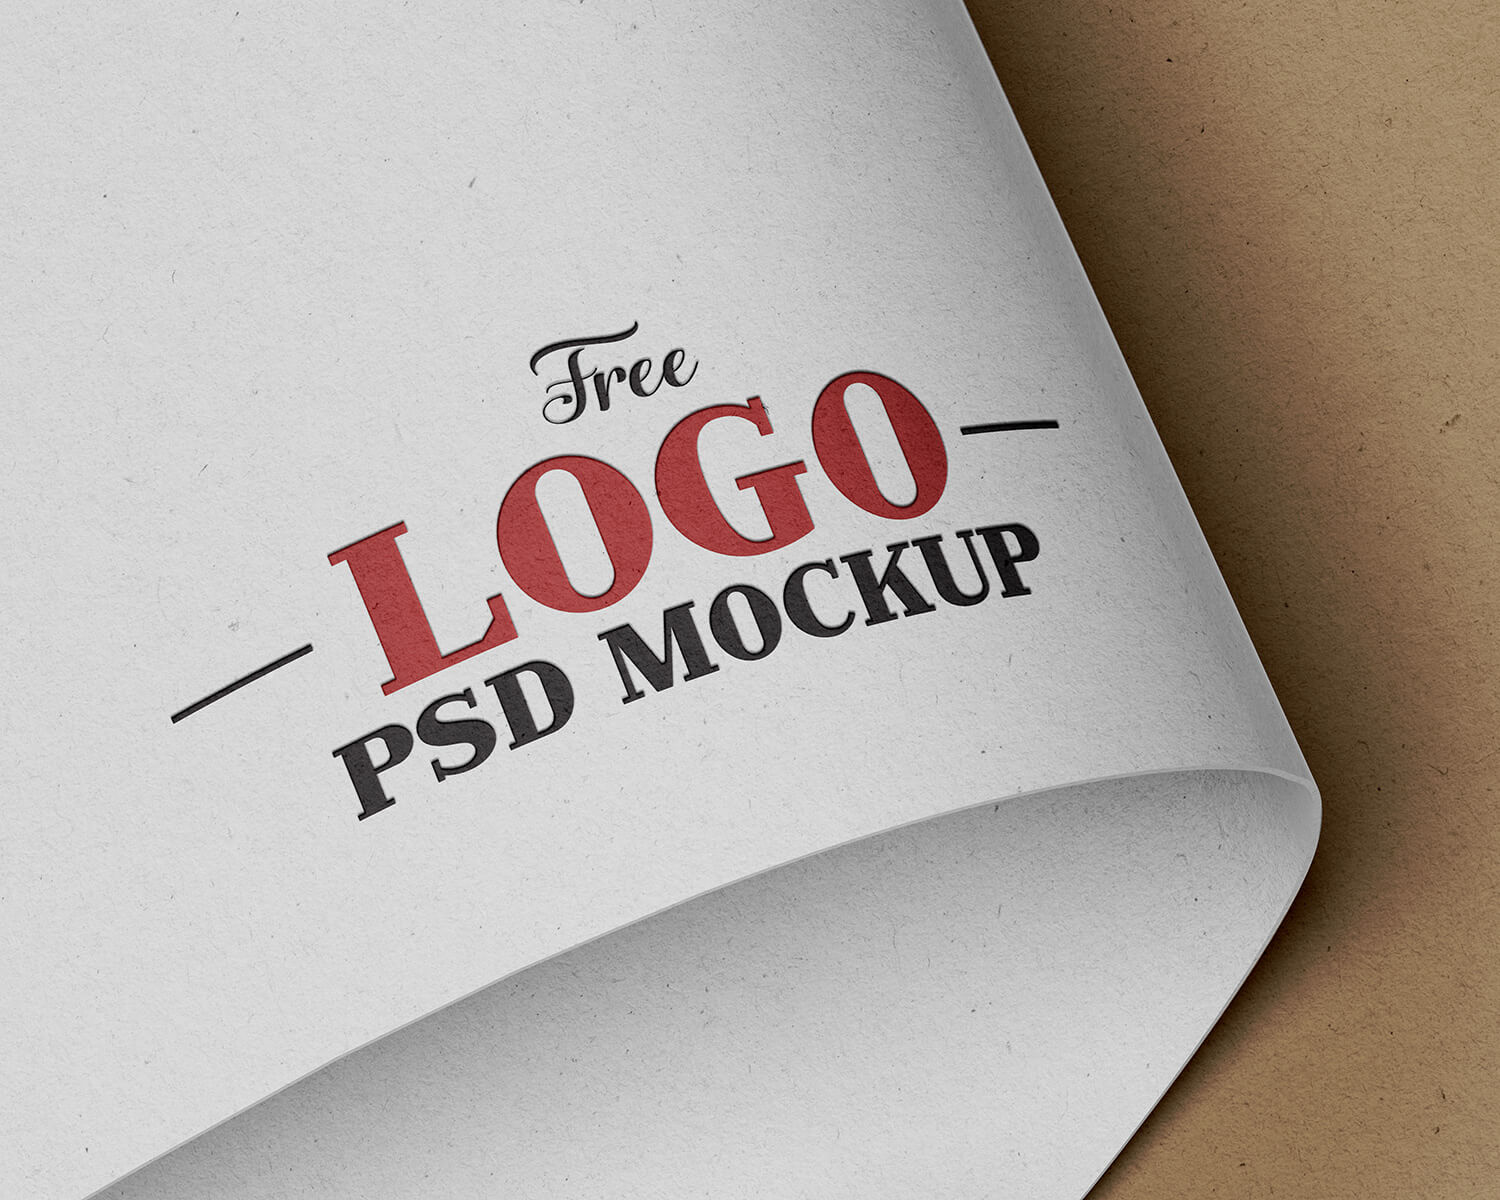 Free Engraved Logo Mockup PSD Set